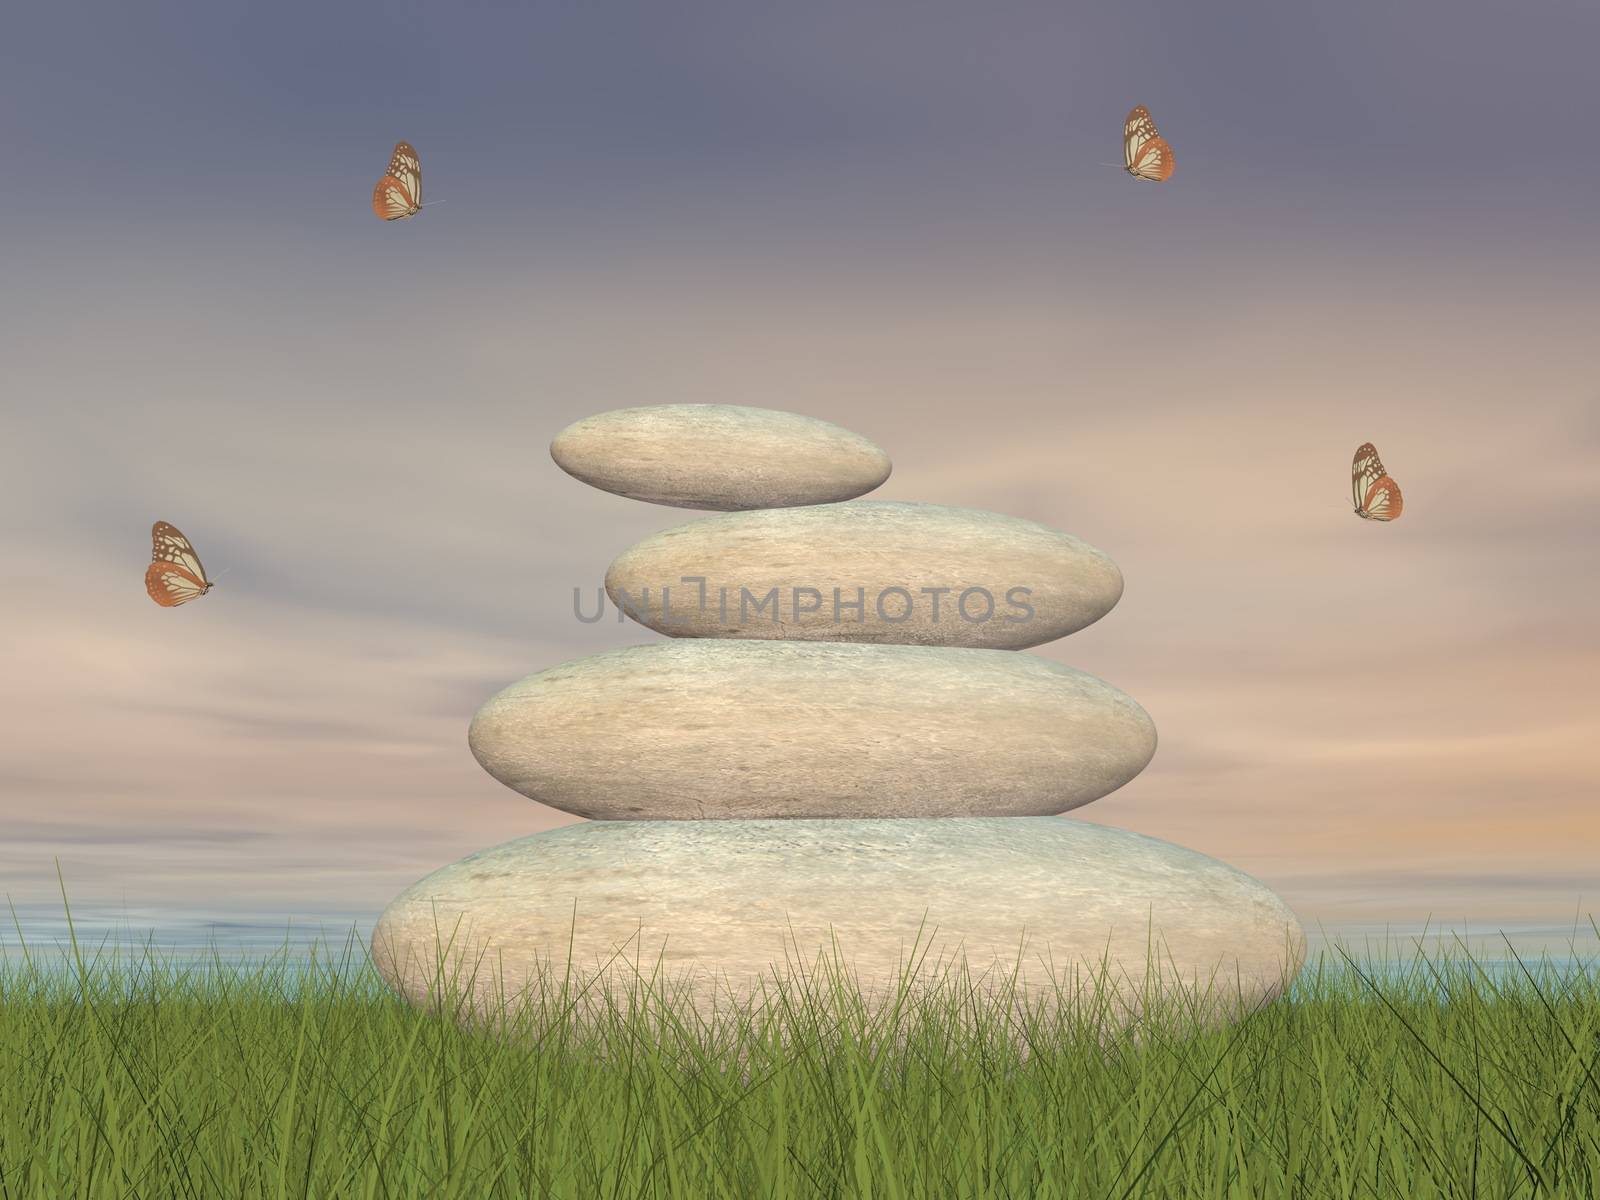 Zen stones, butterflies and peaceful landscape by sunset - 3D render